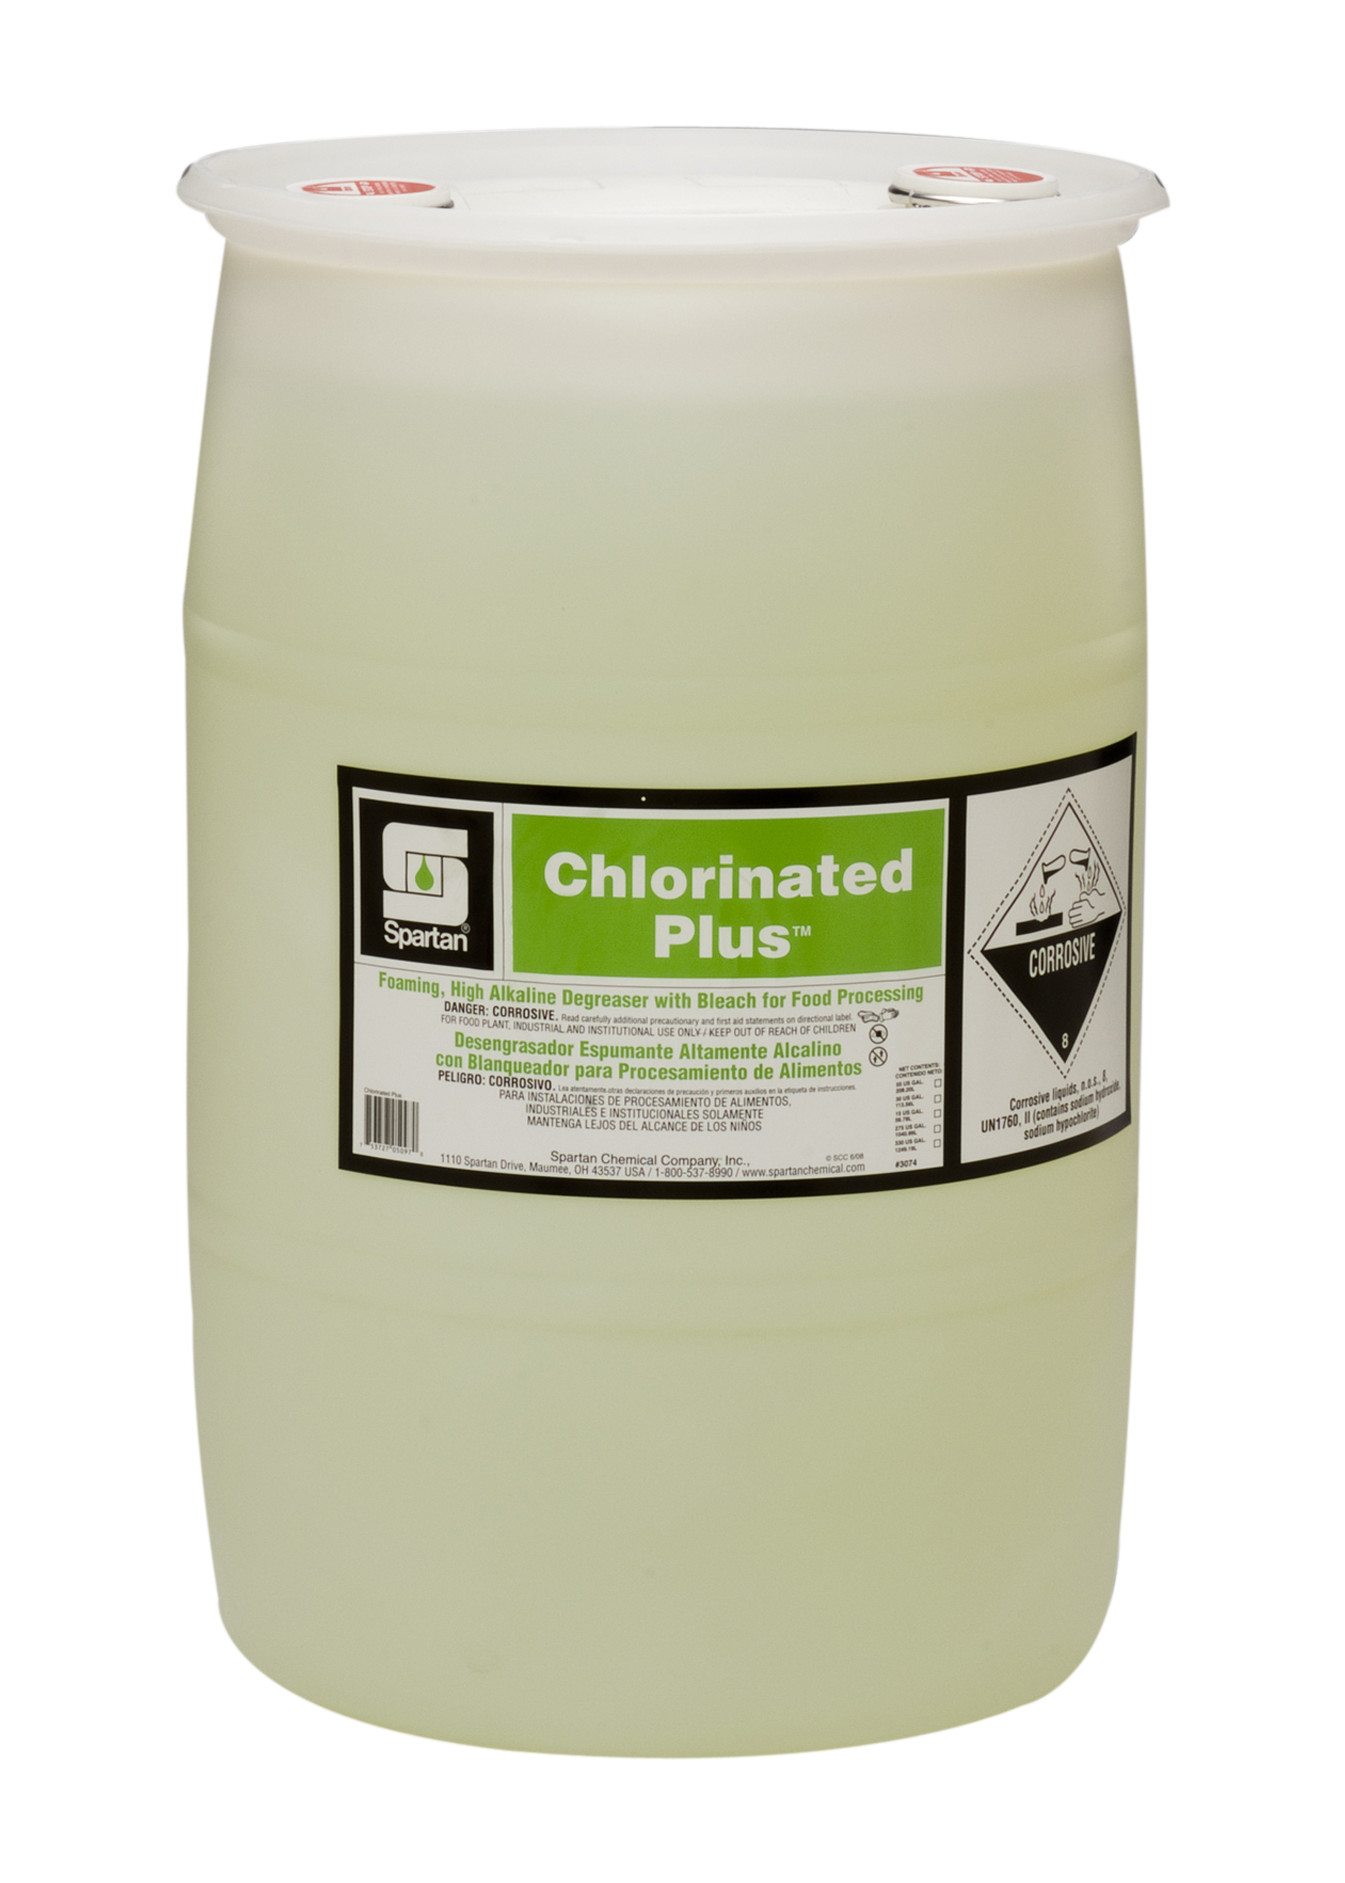 Spartan Chemical Company Chlorinated Plus, 30 GAL DRUM